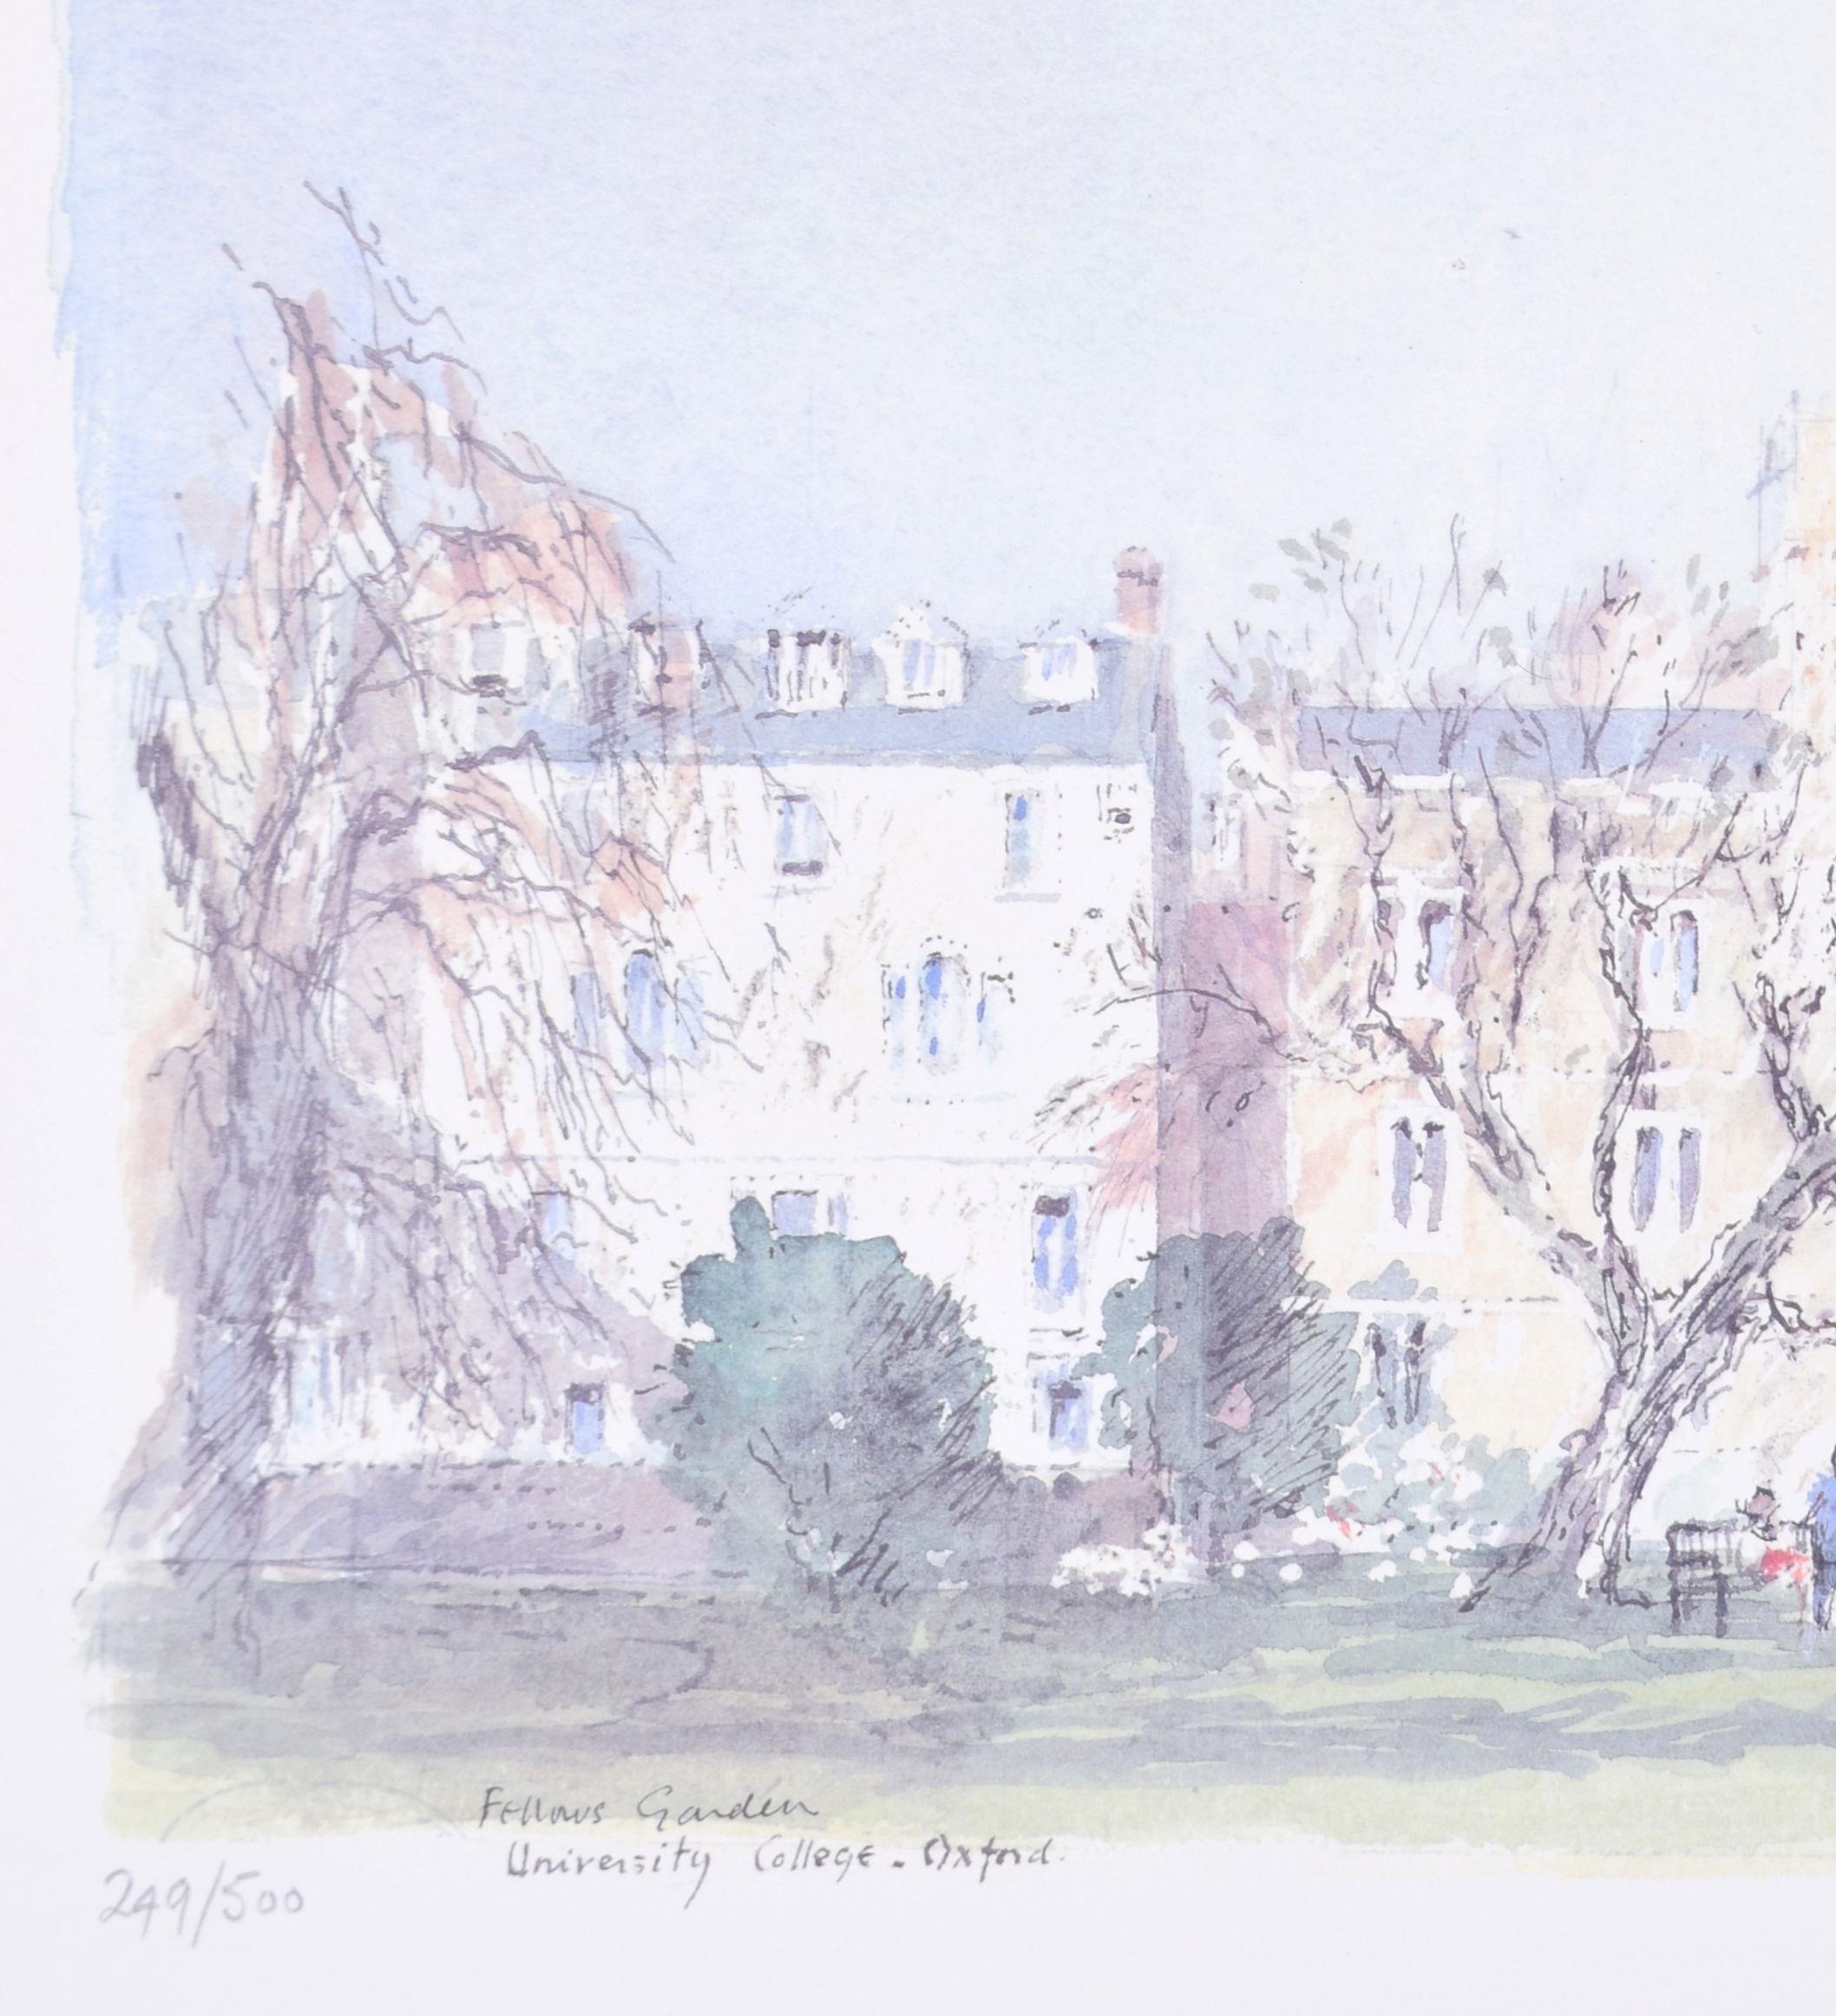 University College, Oxford Fellows' Garden lithograph by Hugh Casson For Sale 1